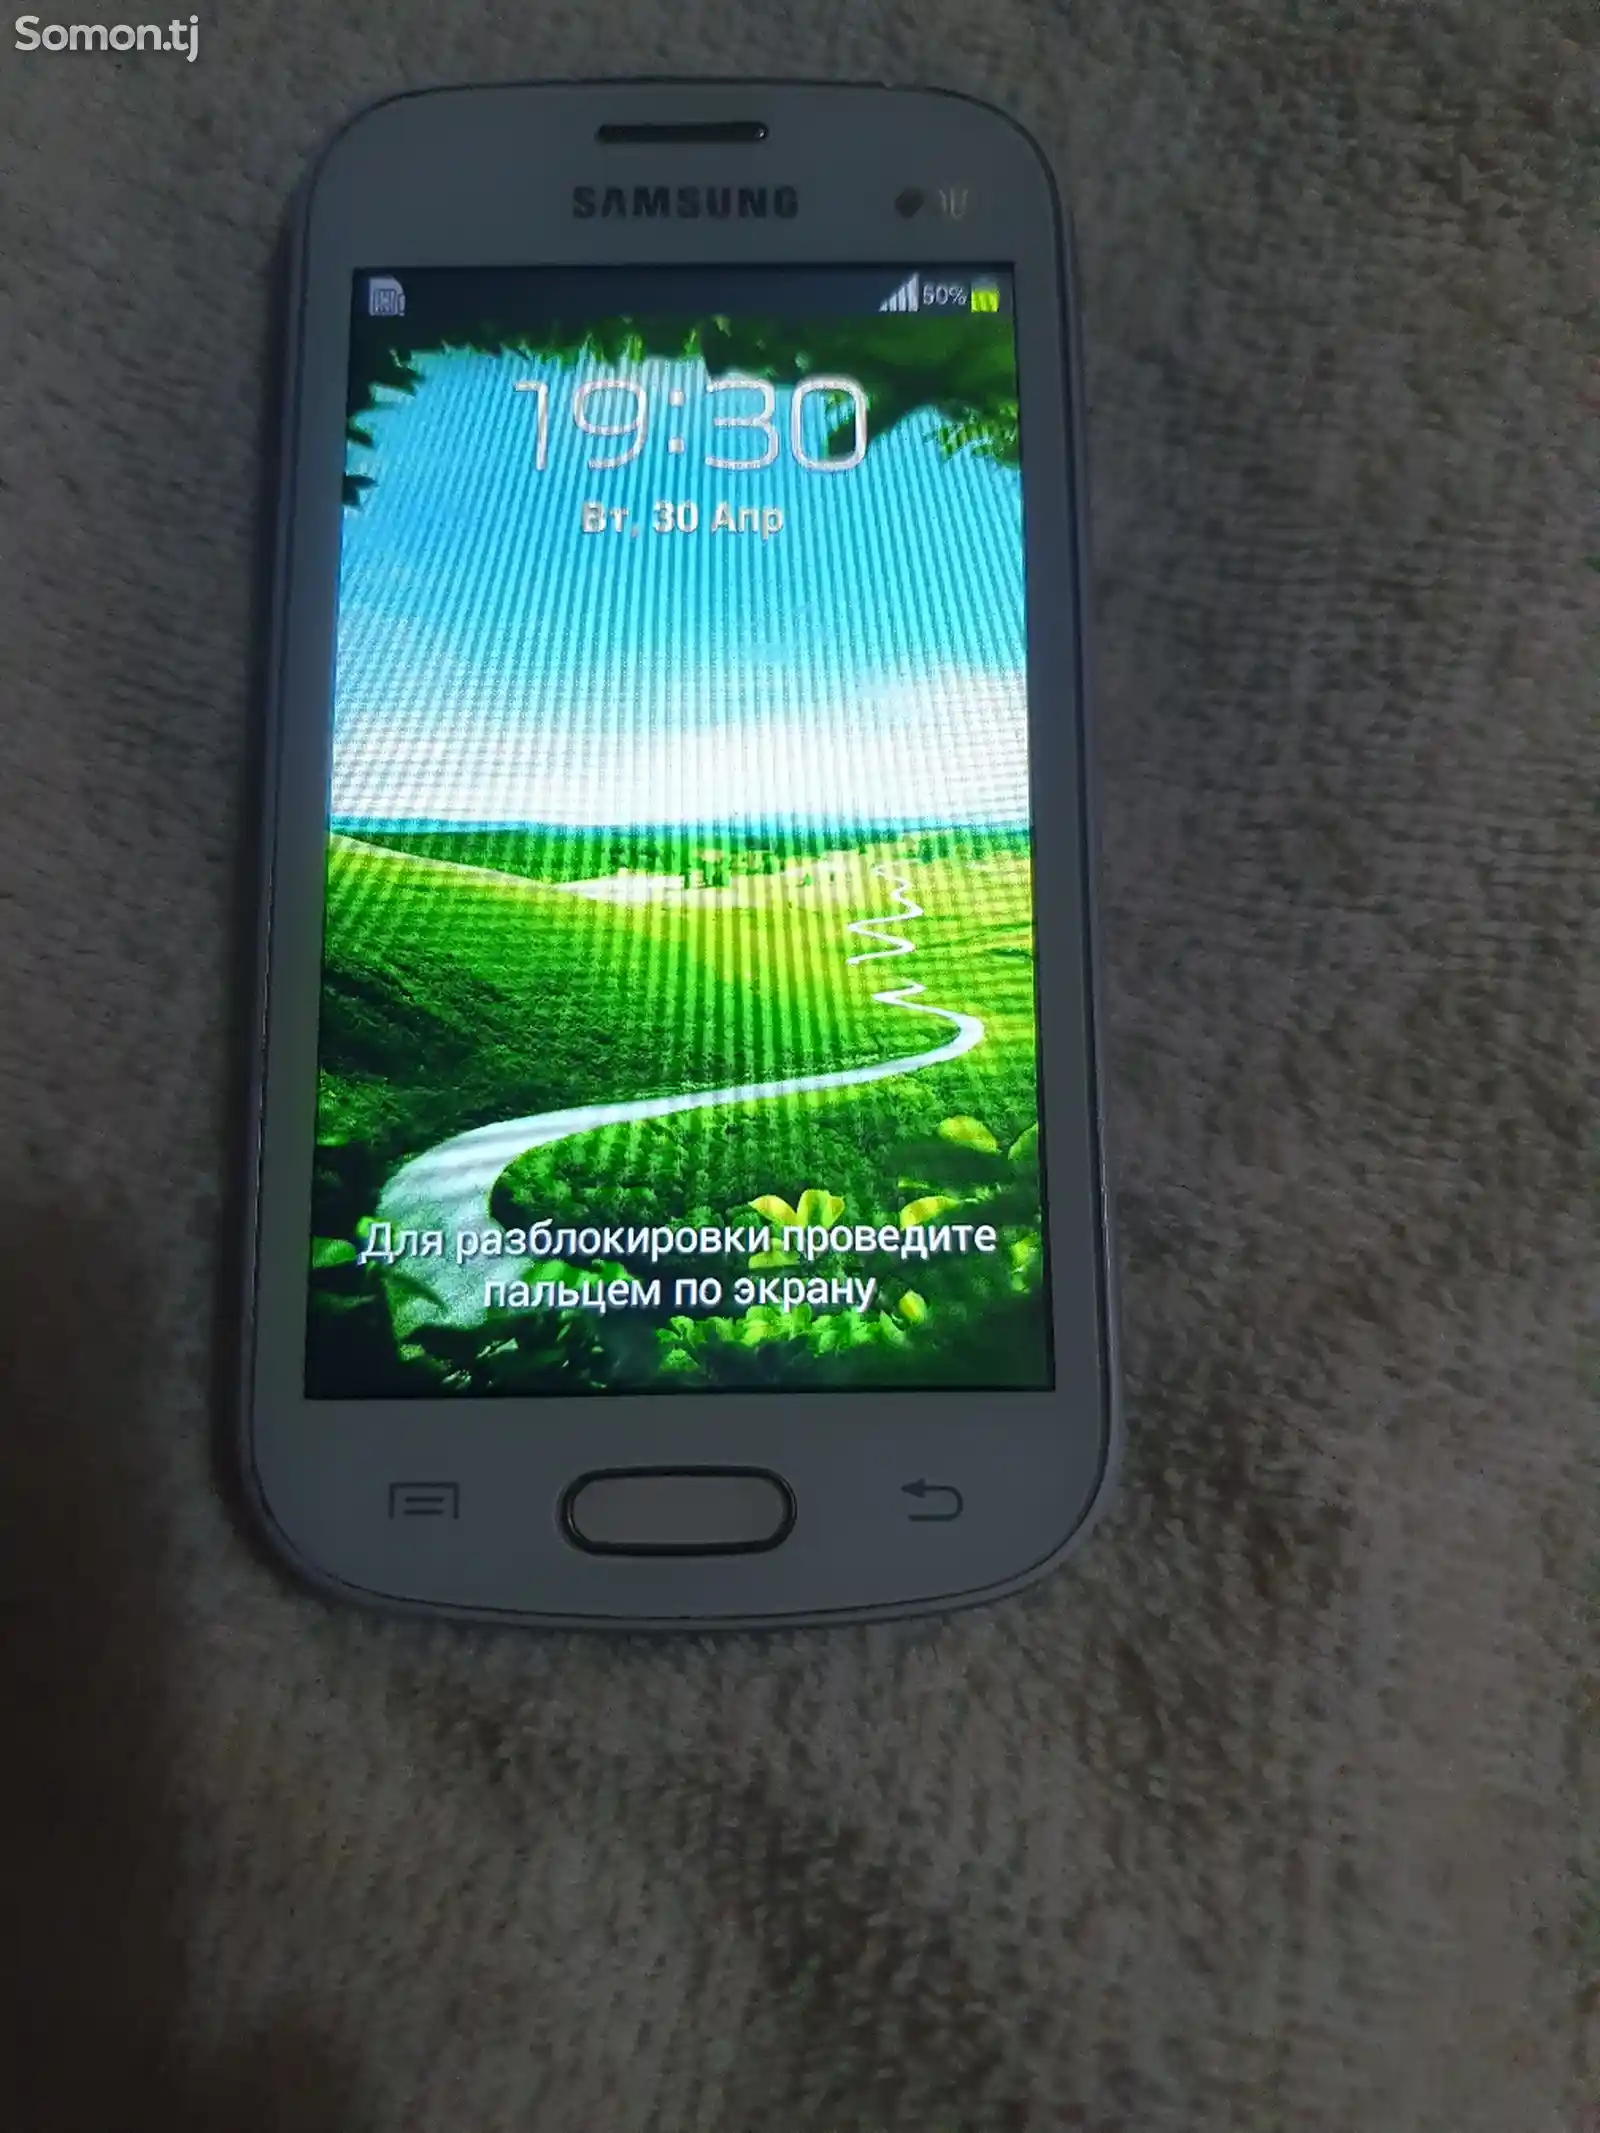 Samsung Galaxy 7390 Duos-1